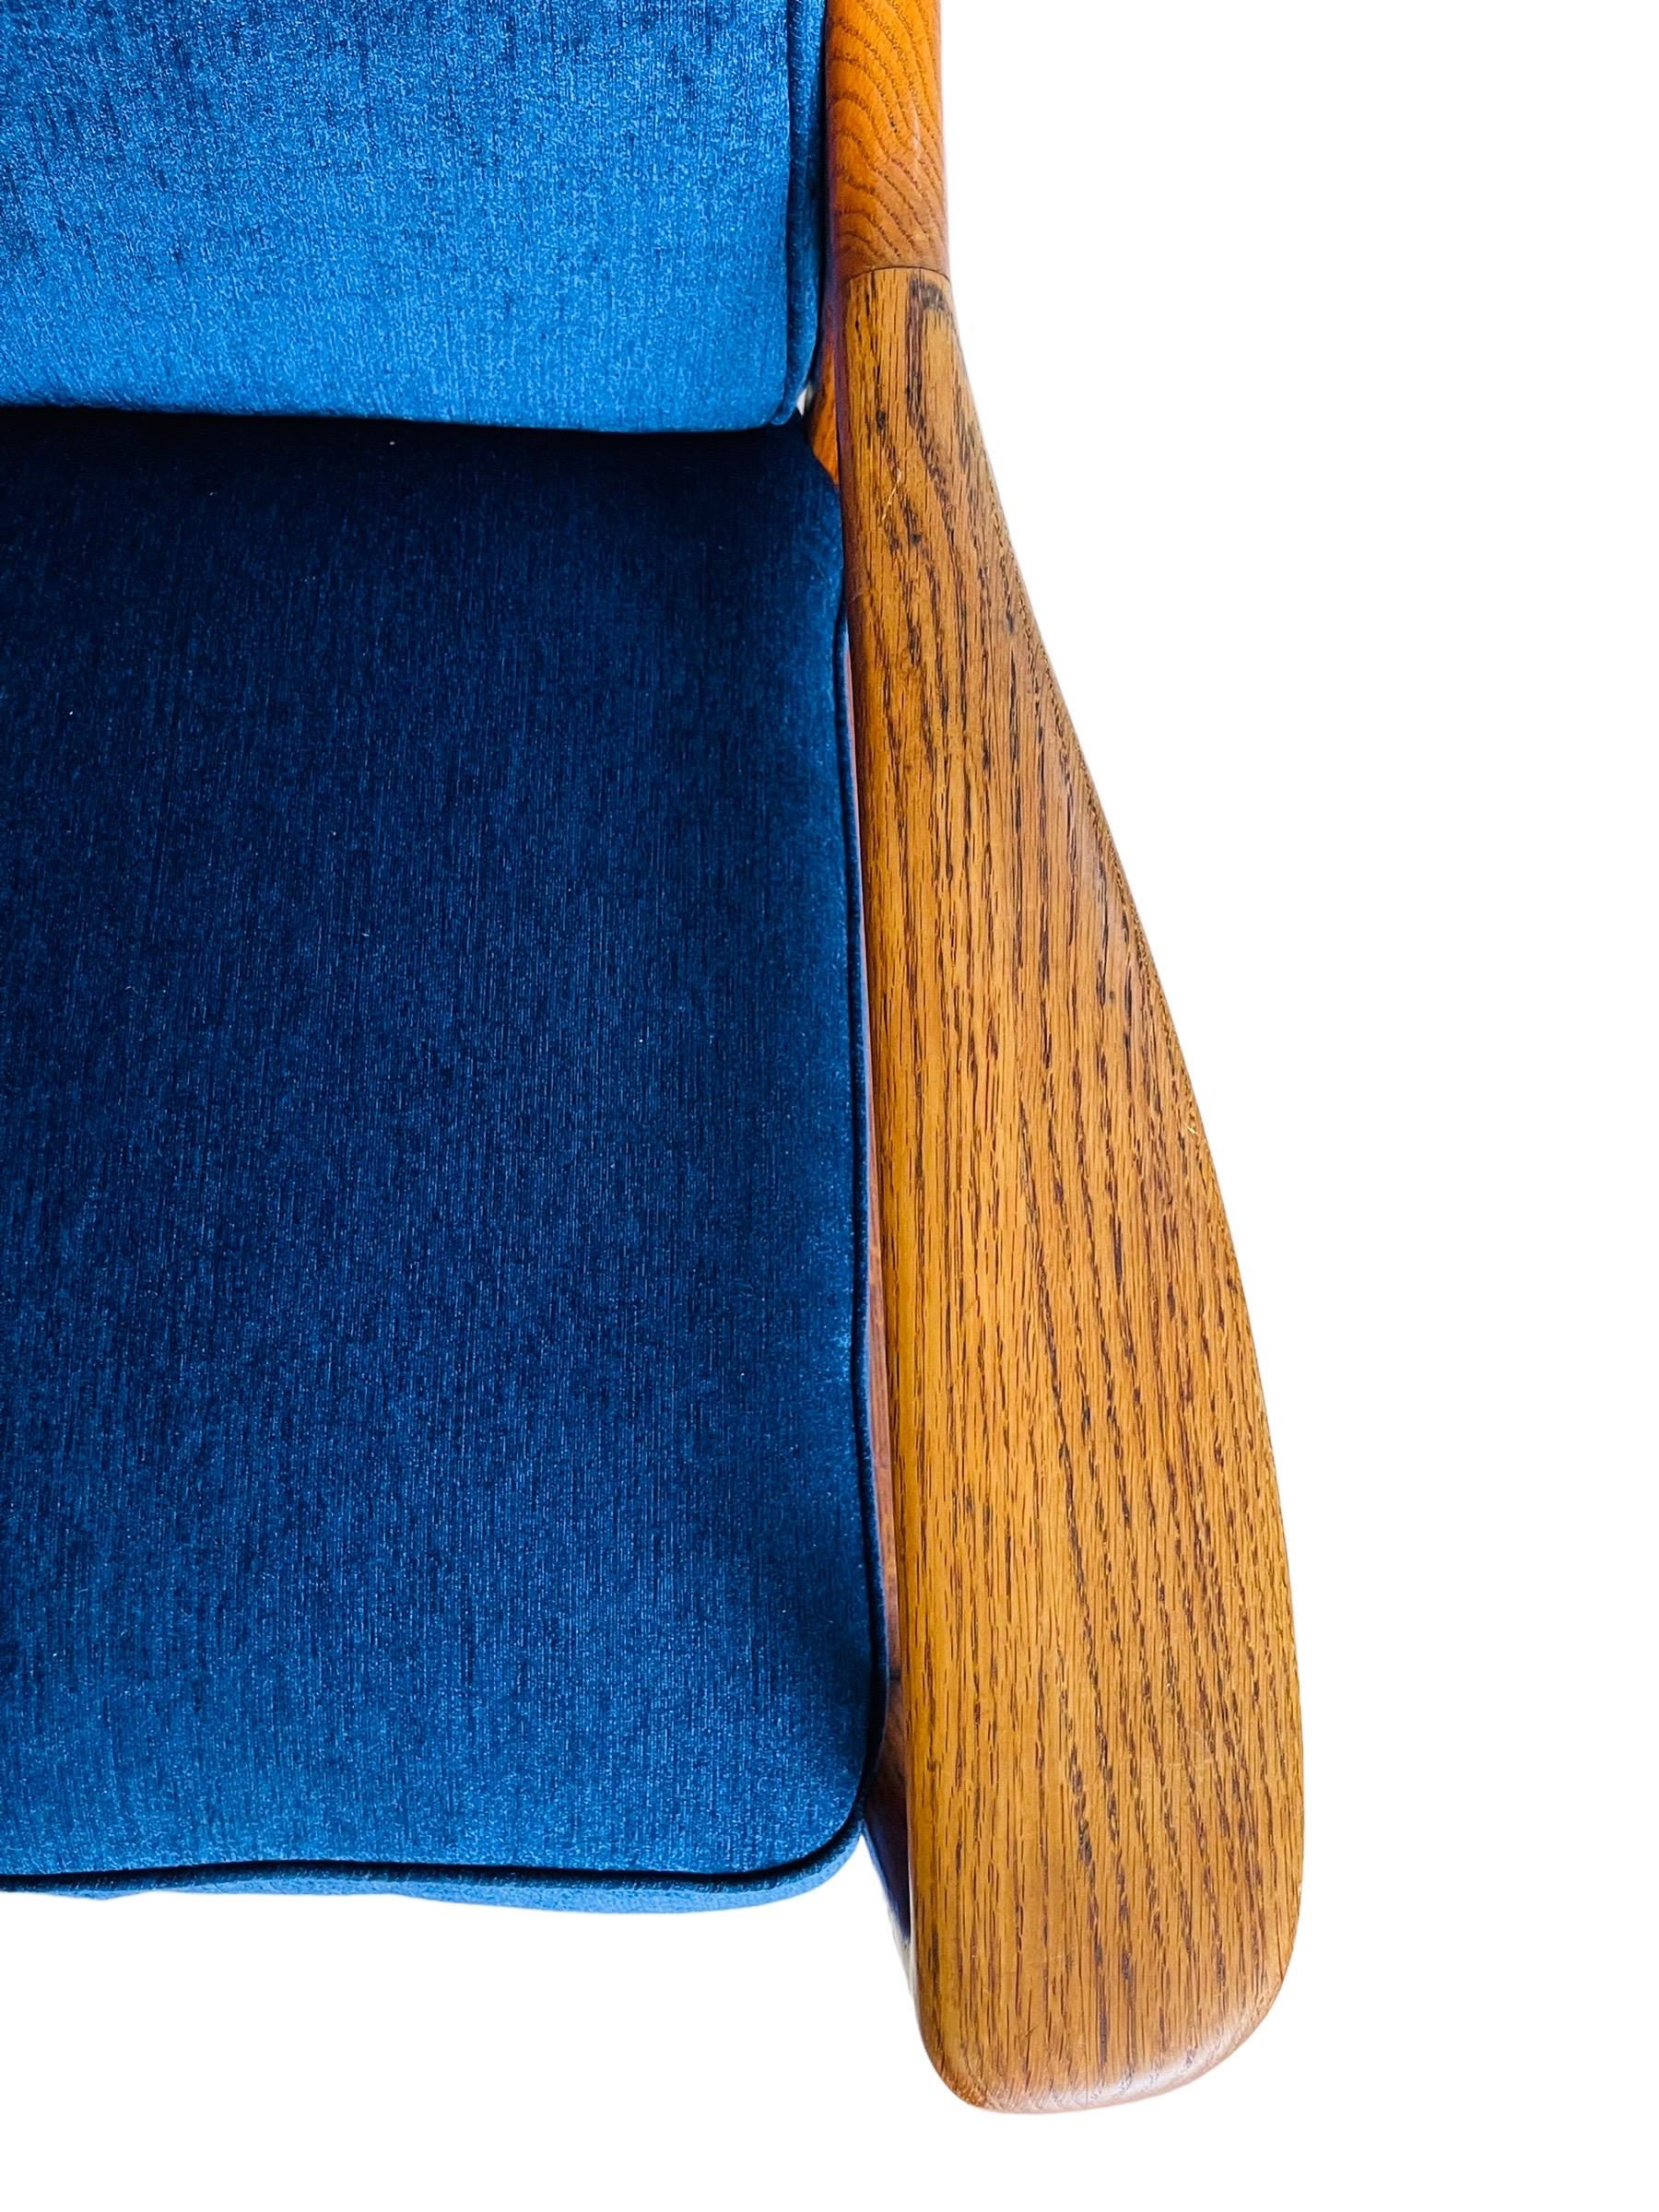 Fabric Mid-Century Modern Oak Lounge Chair by Jack Van Der Molen